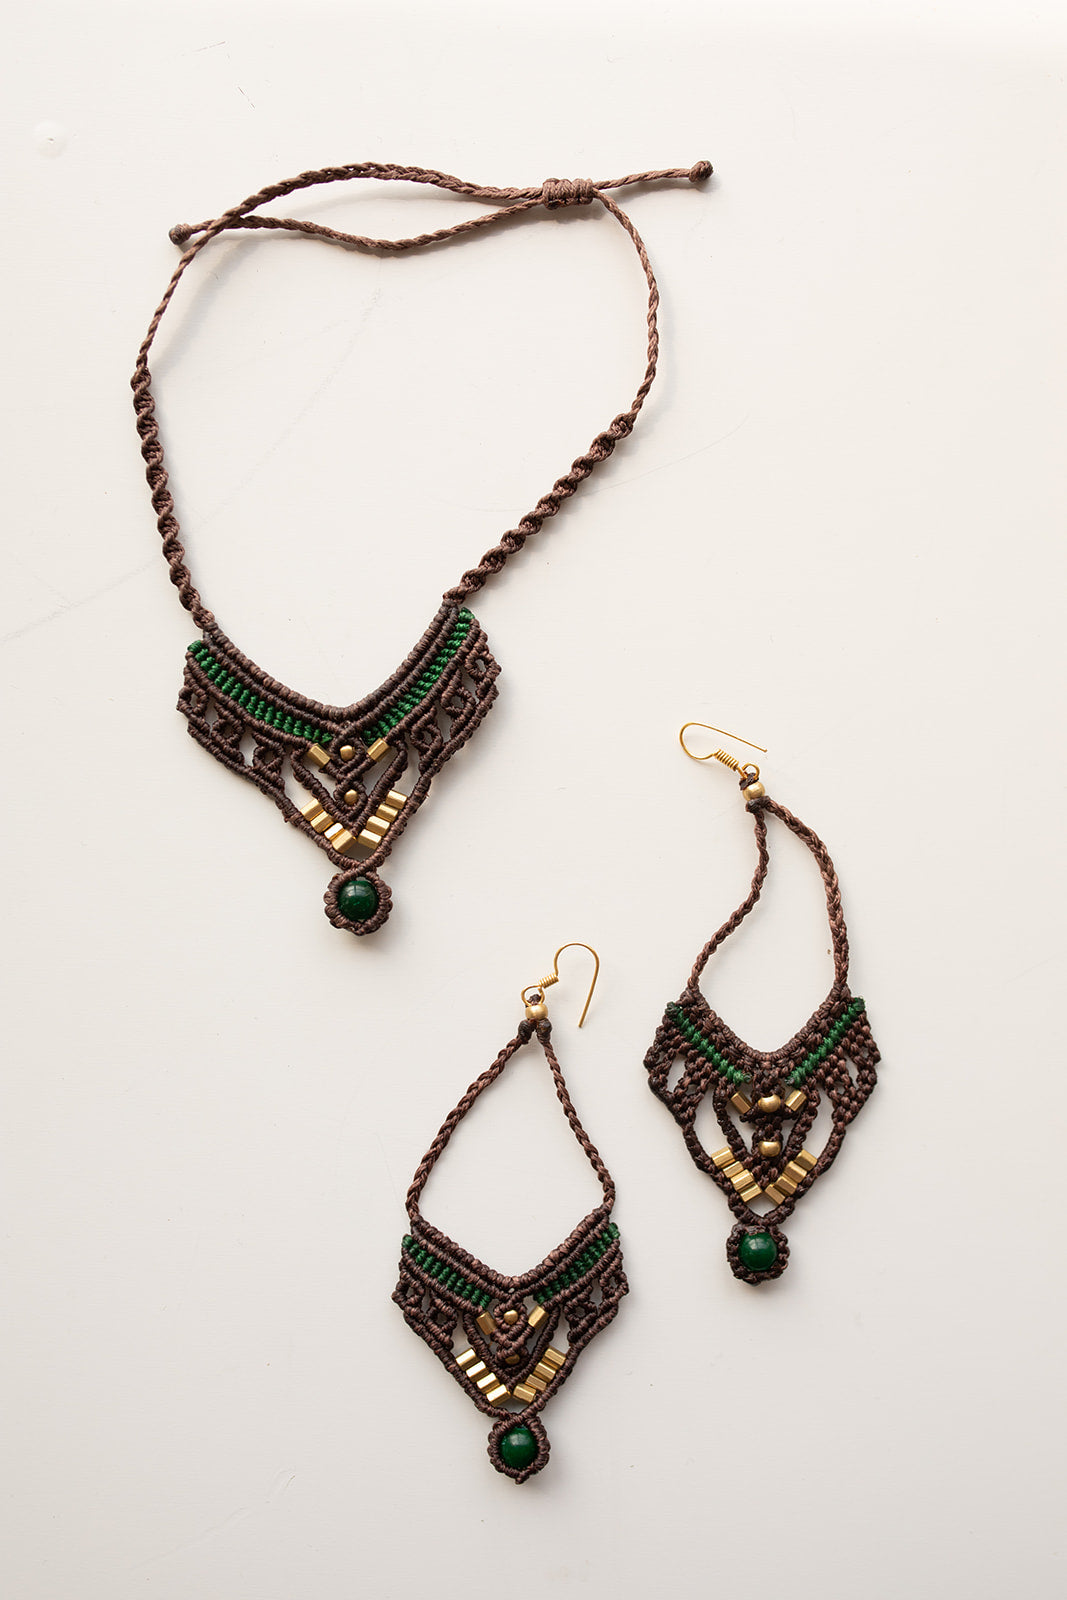 Tibet Style Earrings - Dark brown/Bamboo green